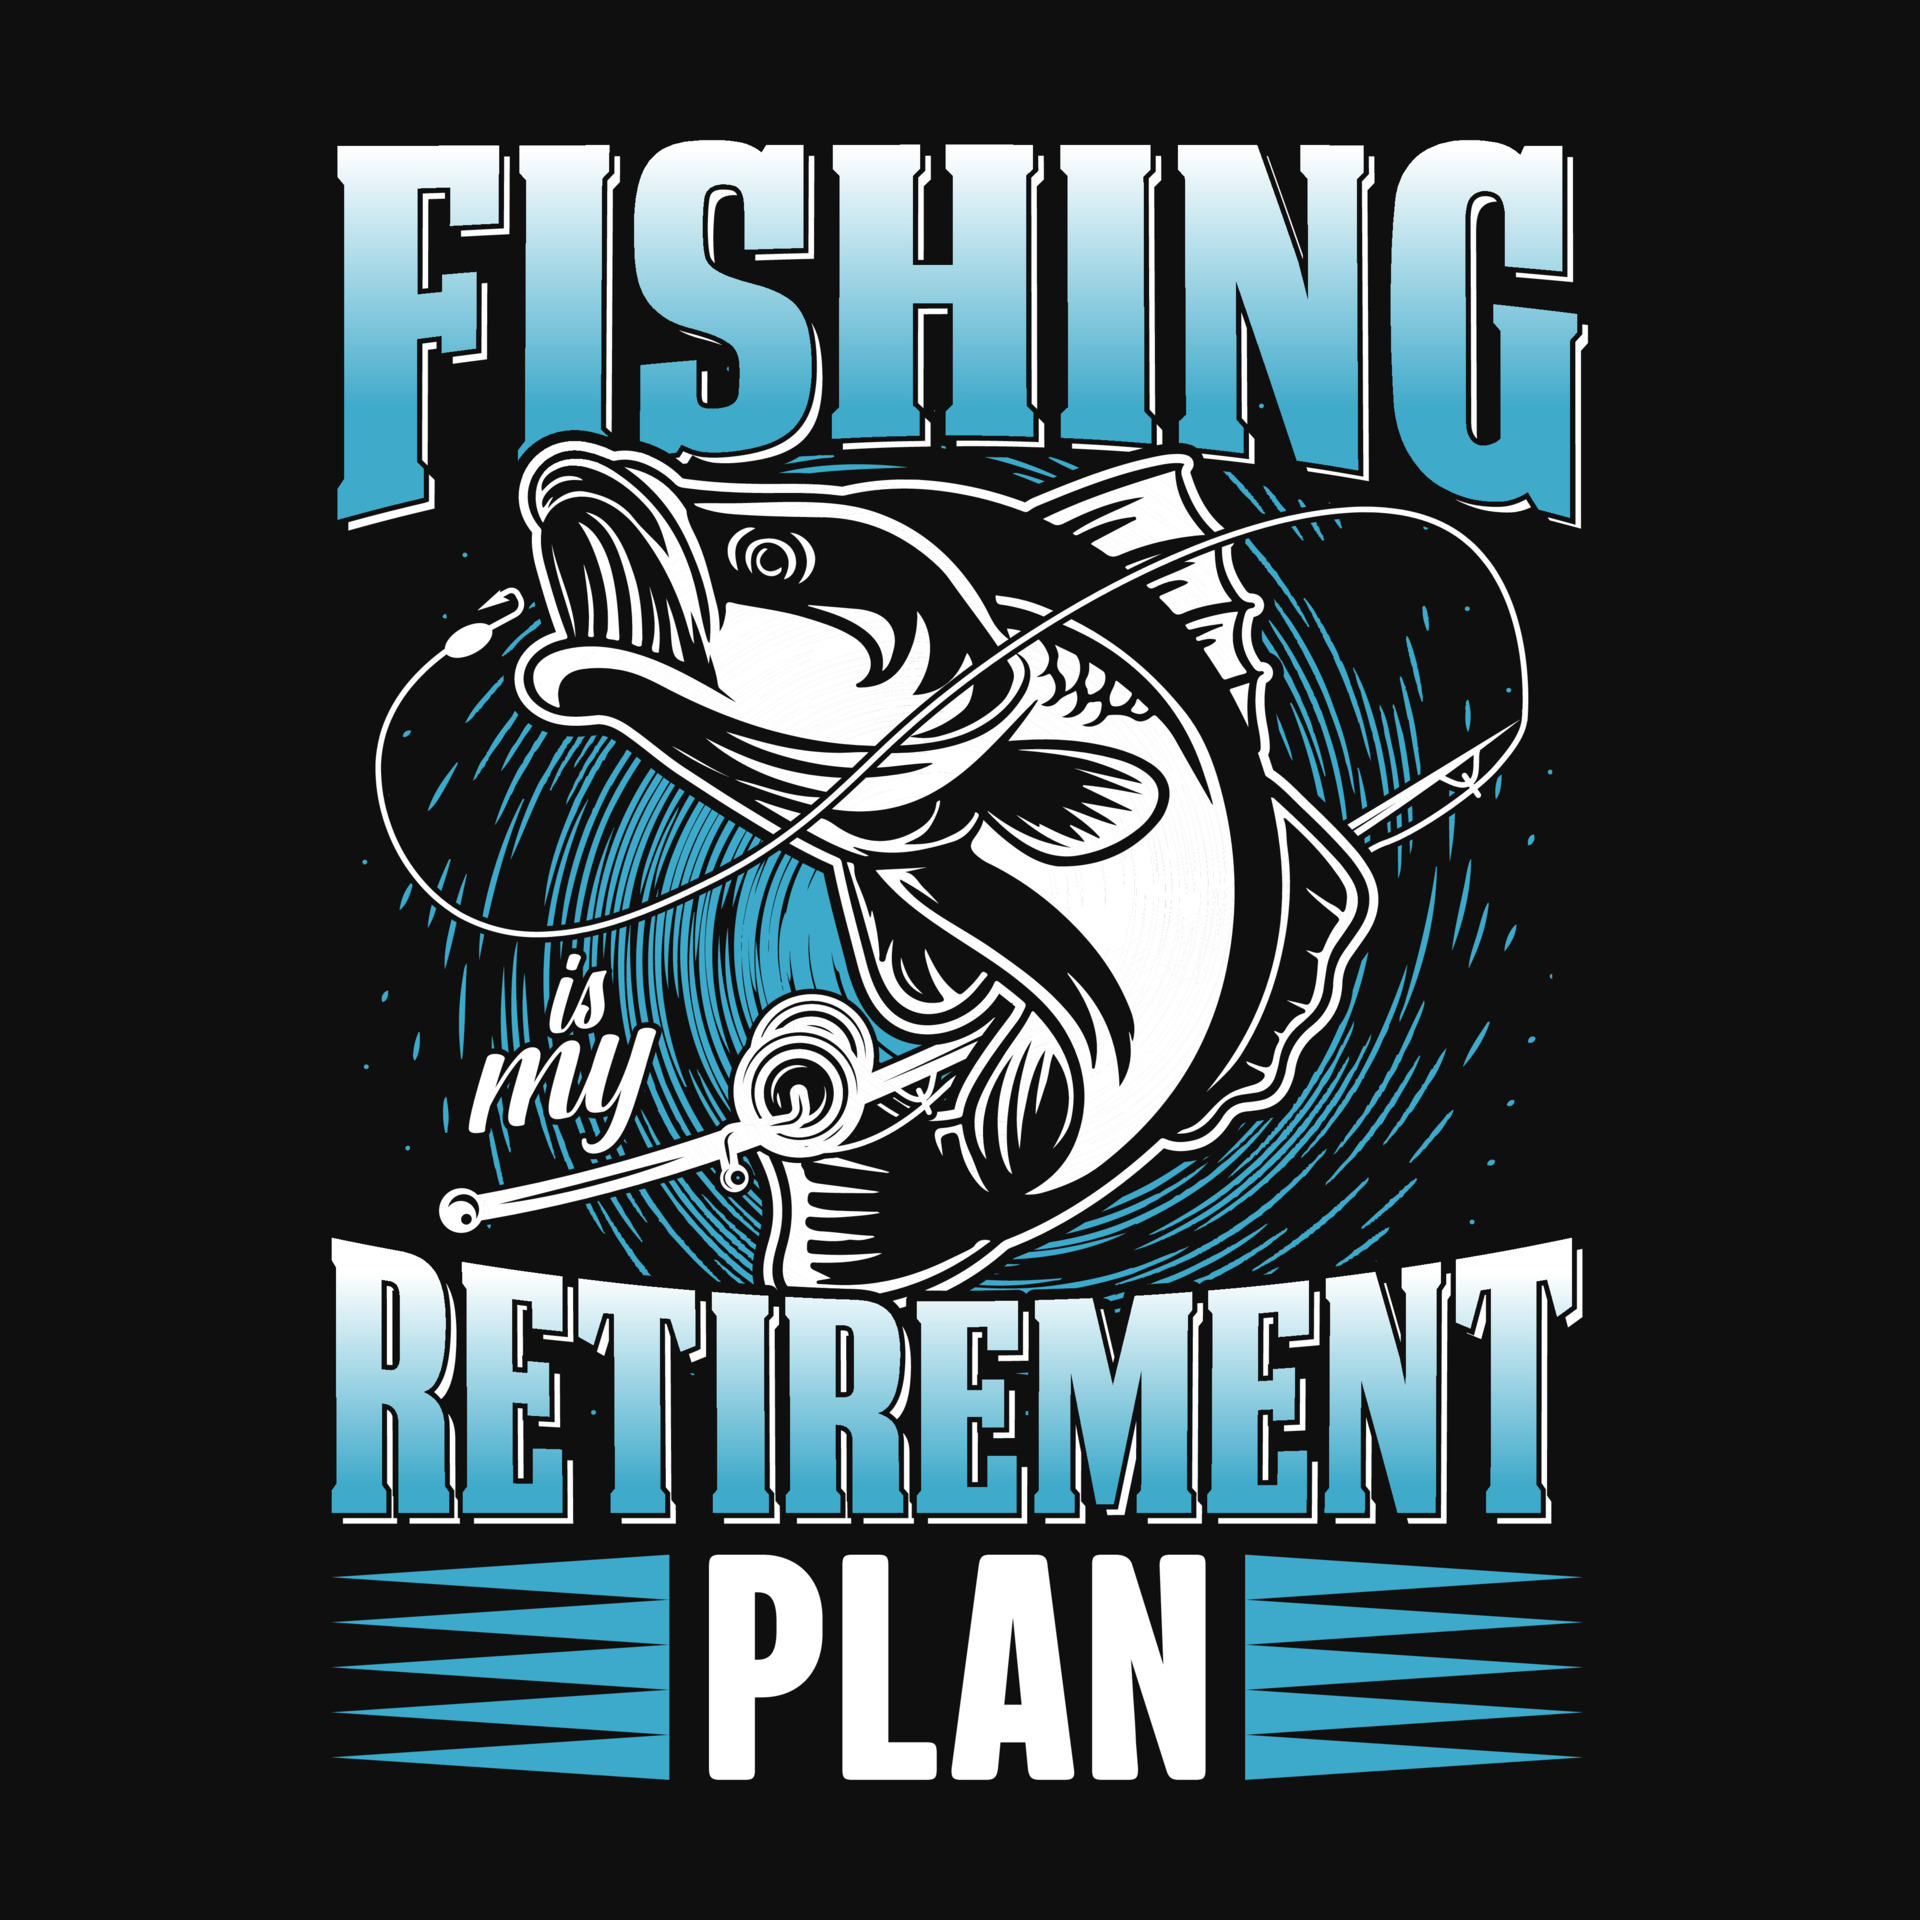 Fishing is my retirement plan - Fishing quotes vector design, t shirt  design 21737634 Vector Art at Vecteezy